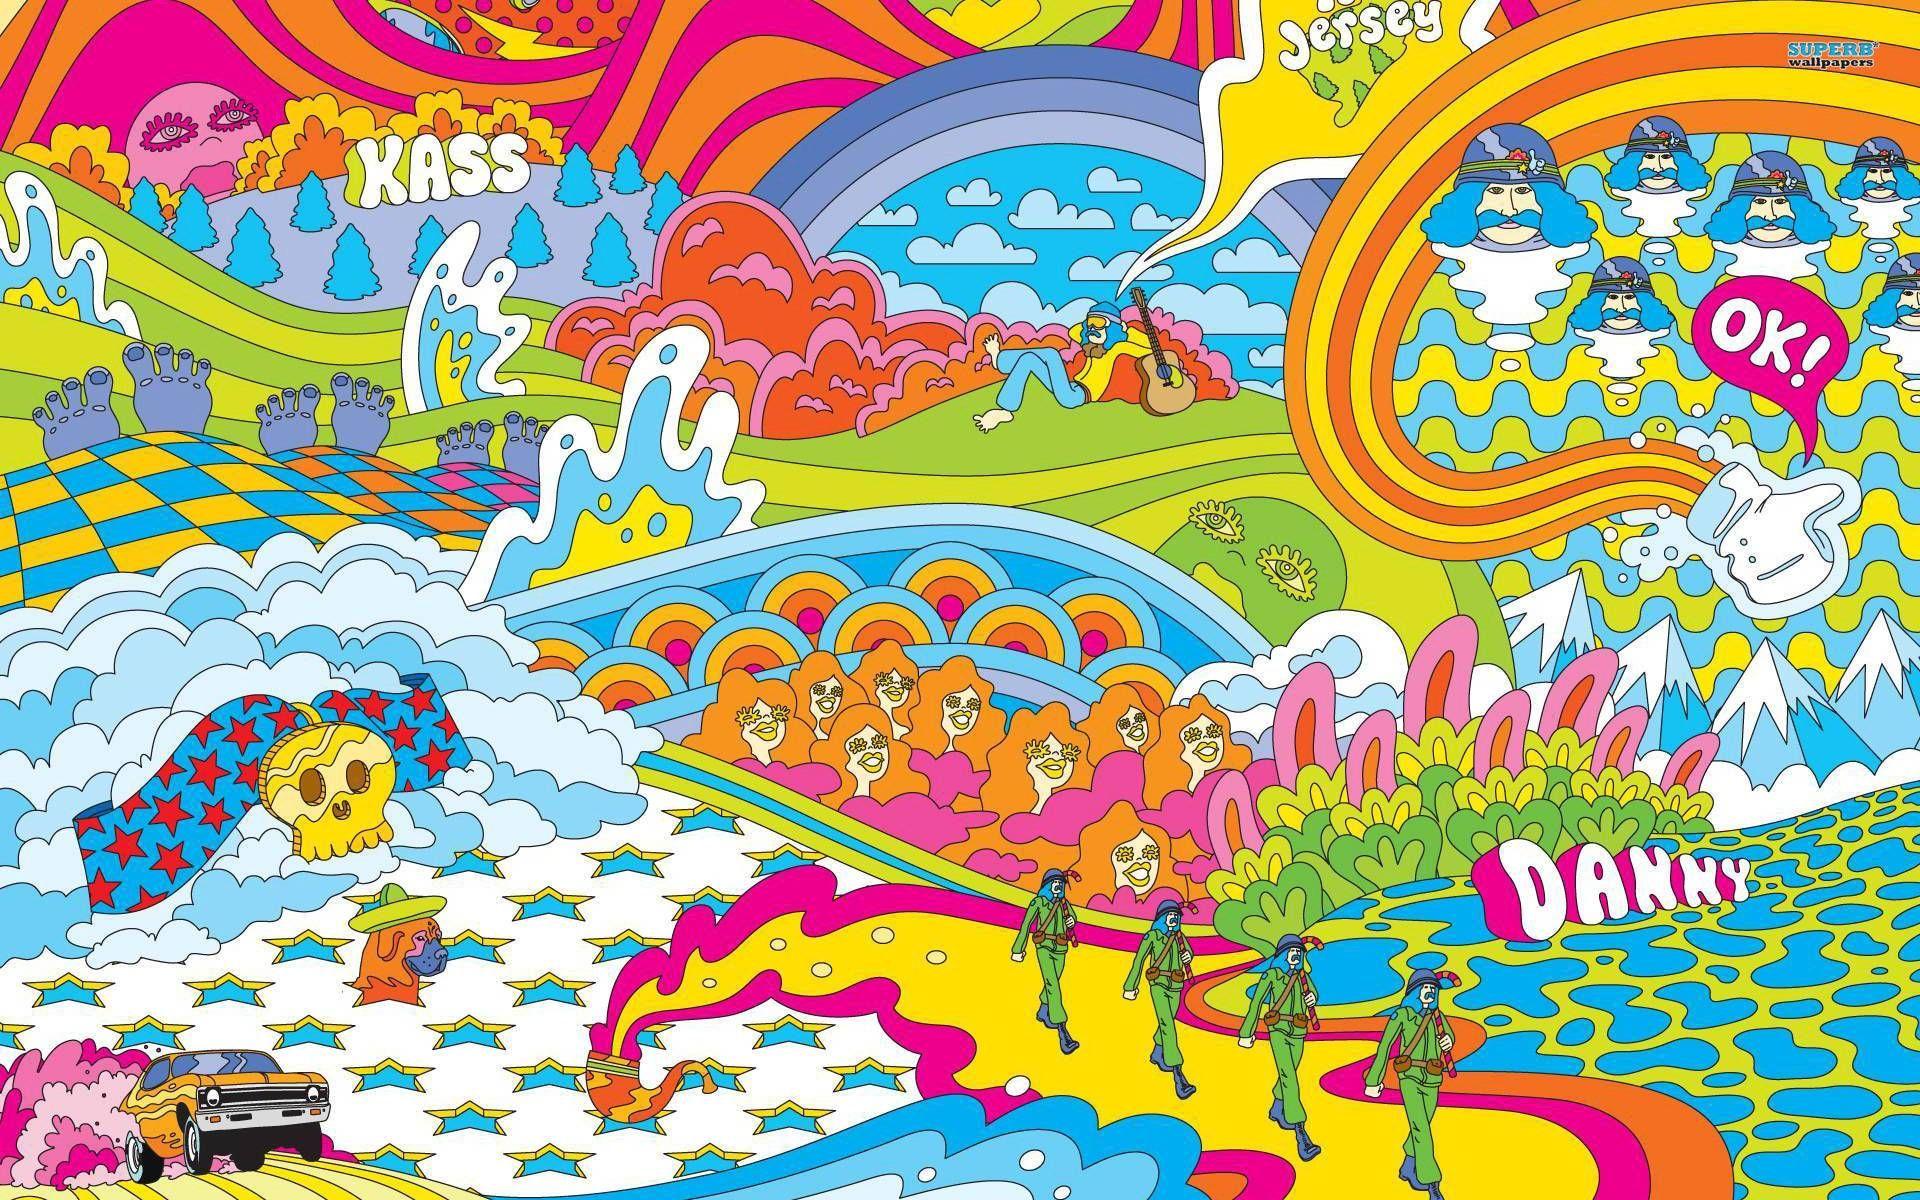 Hippie Wallpaper High Quality Free Download. Hippie wallpaper